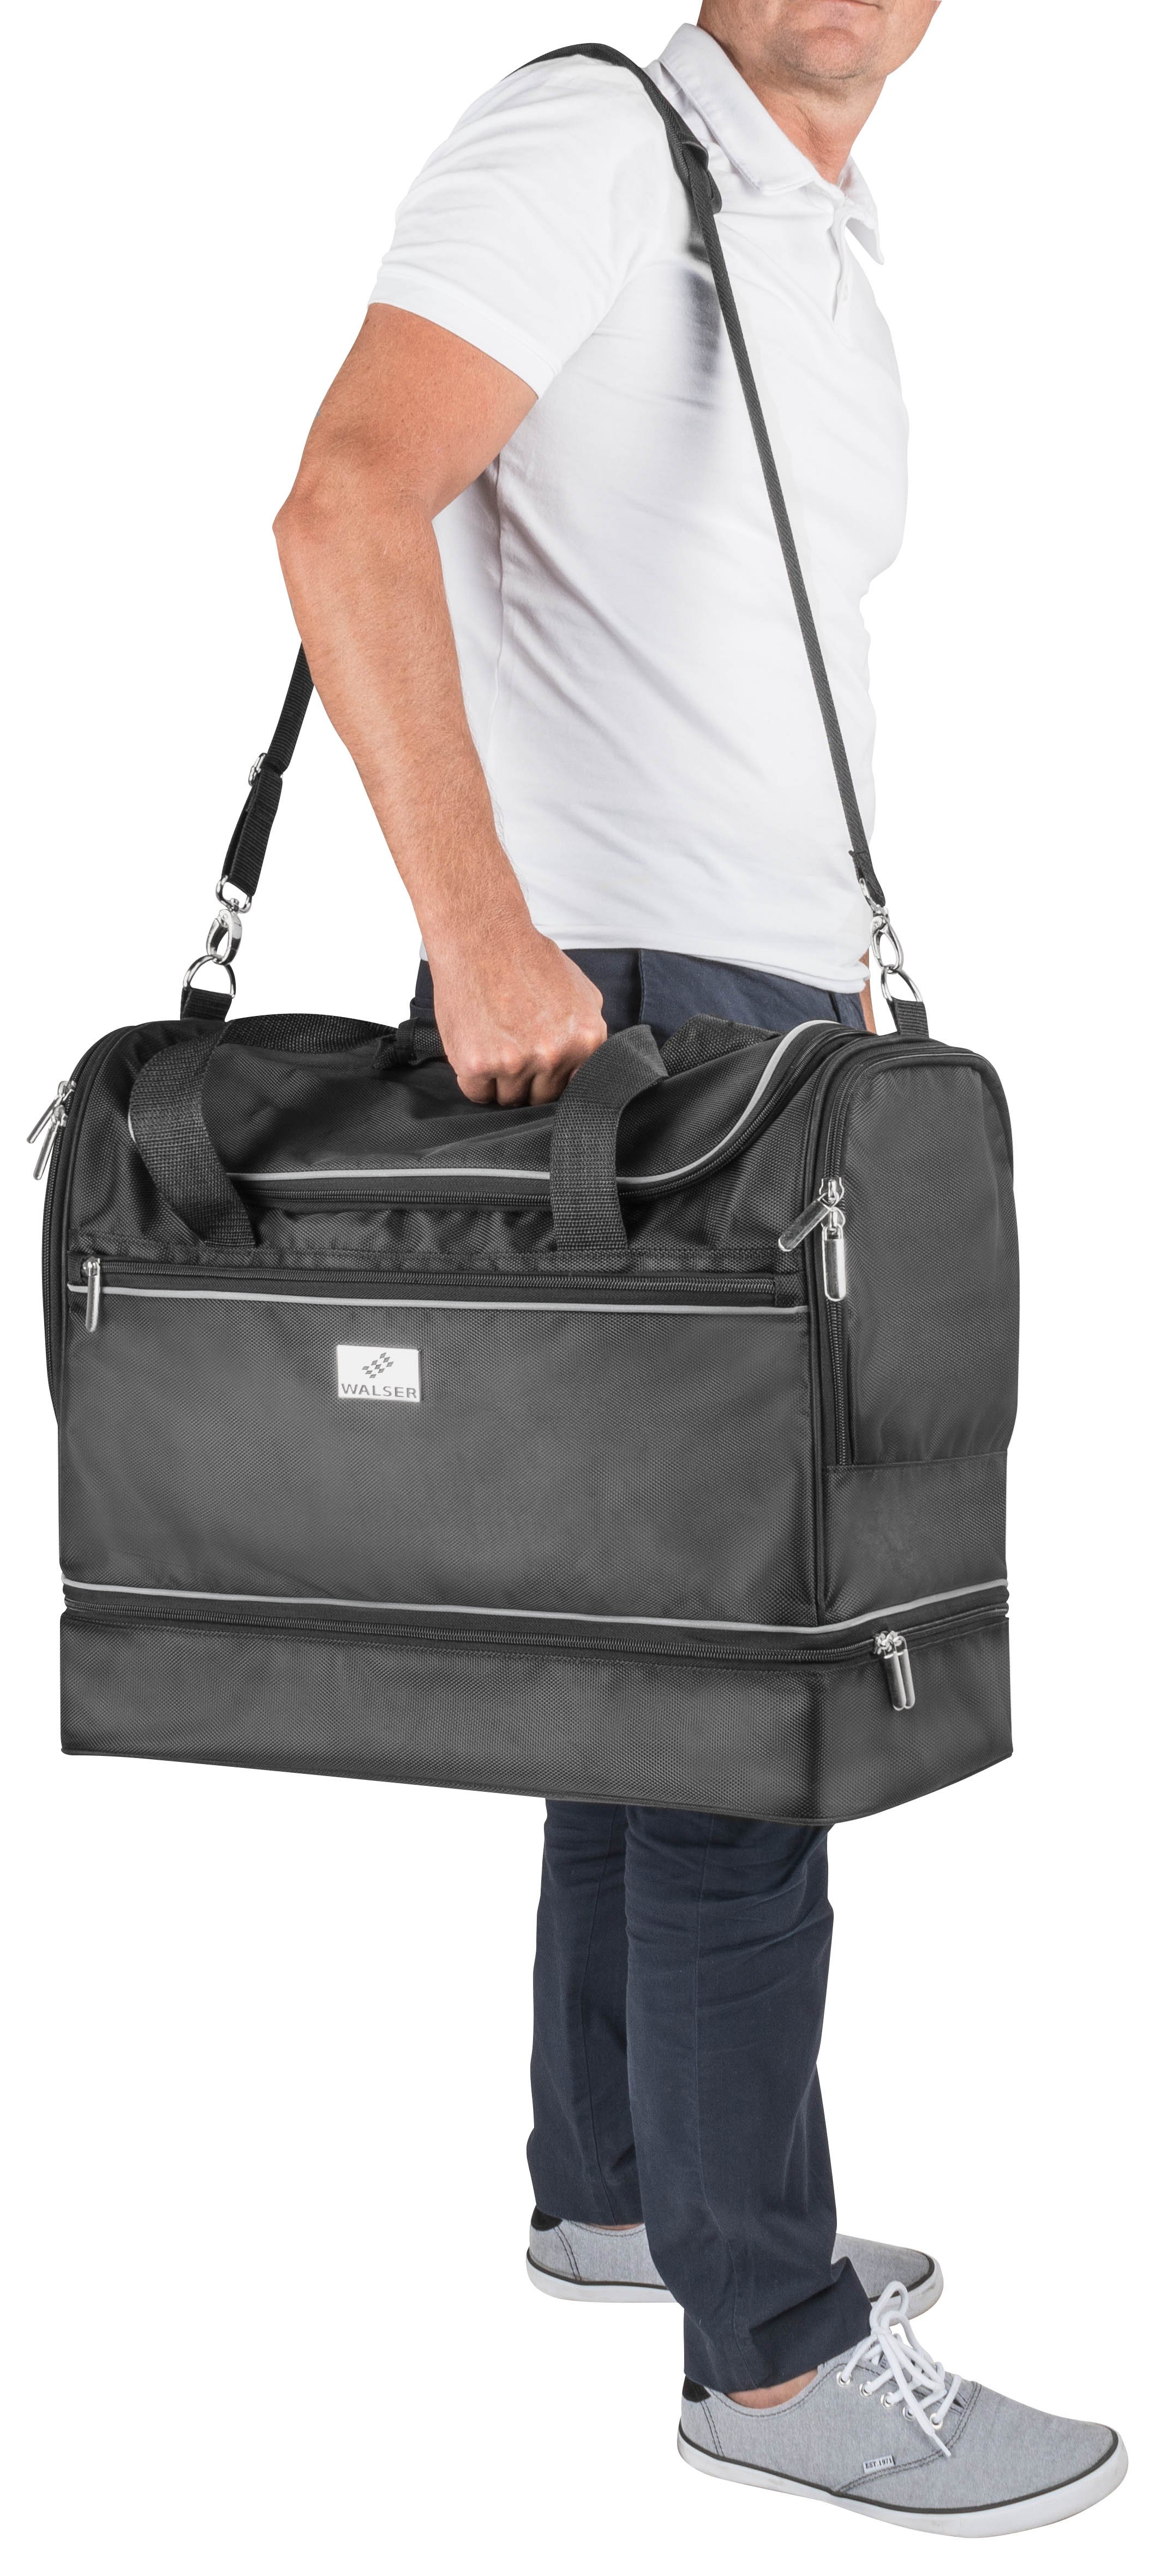 Carbags sports bag 50x30x45cm black